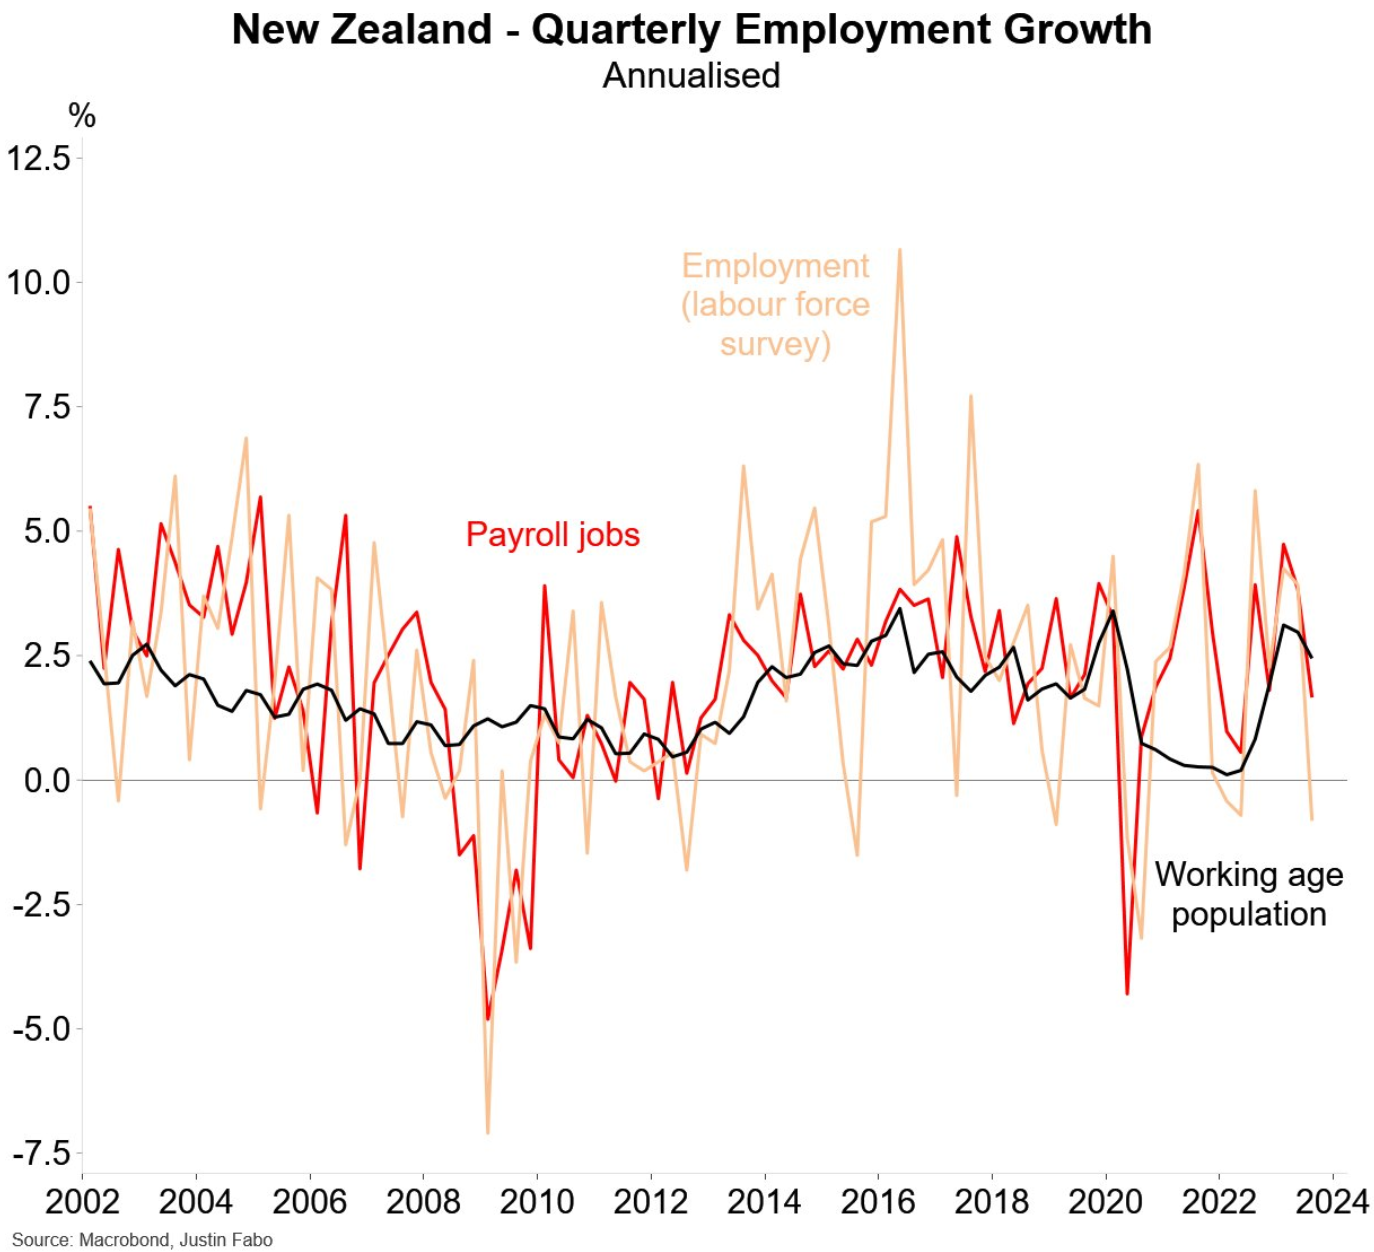 Quarterly employment growth